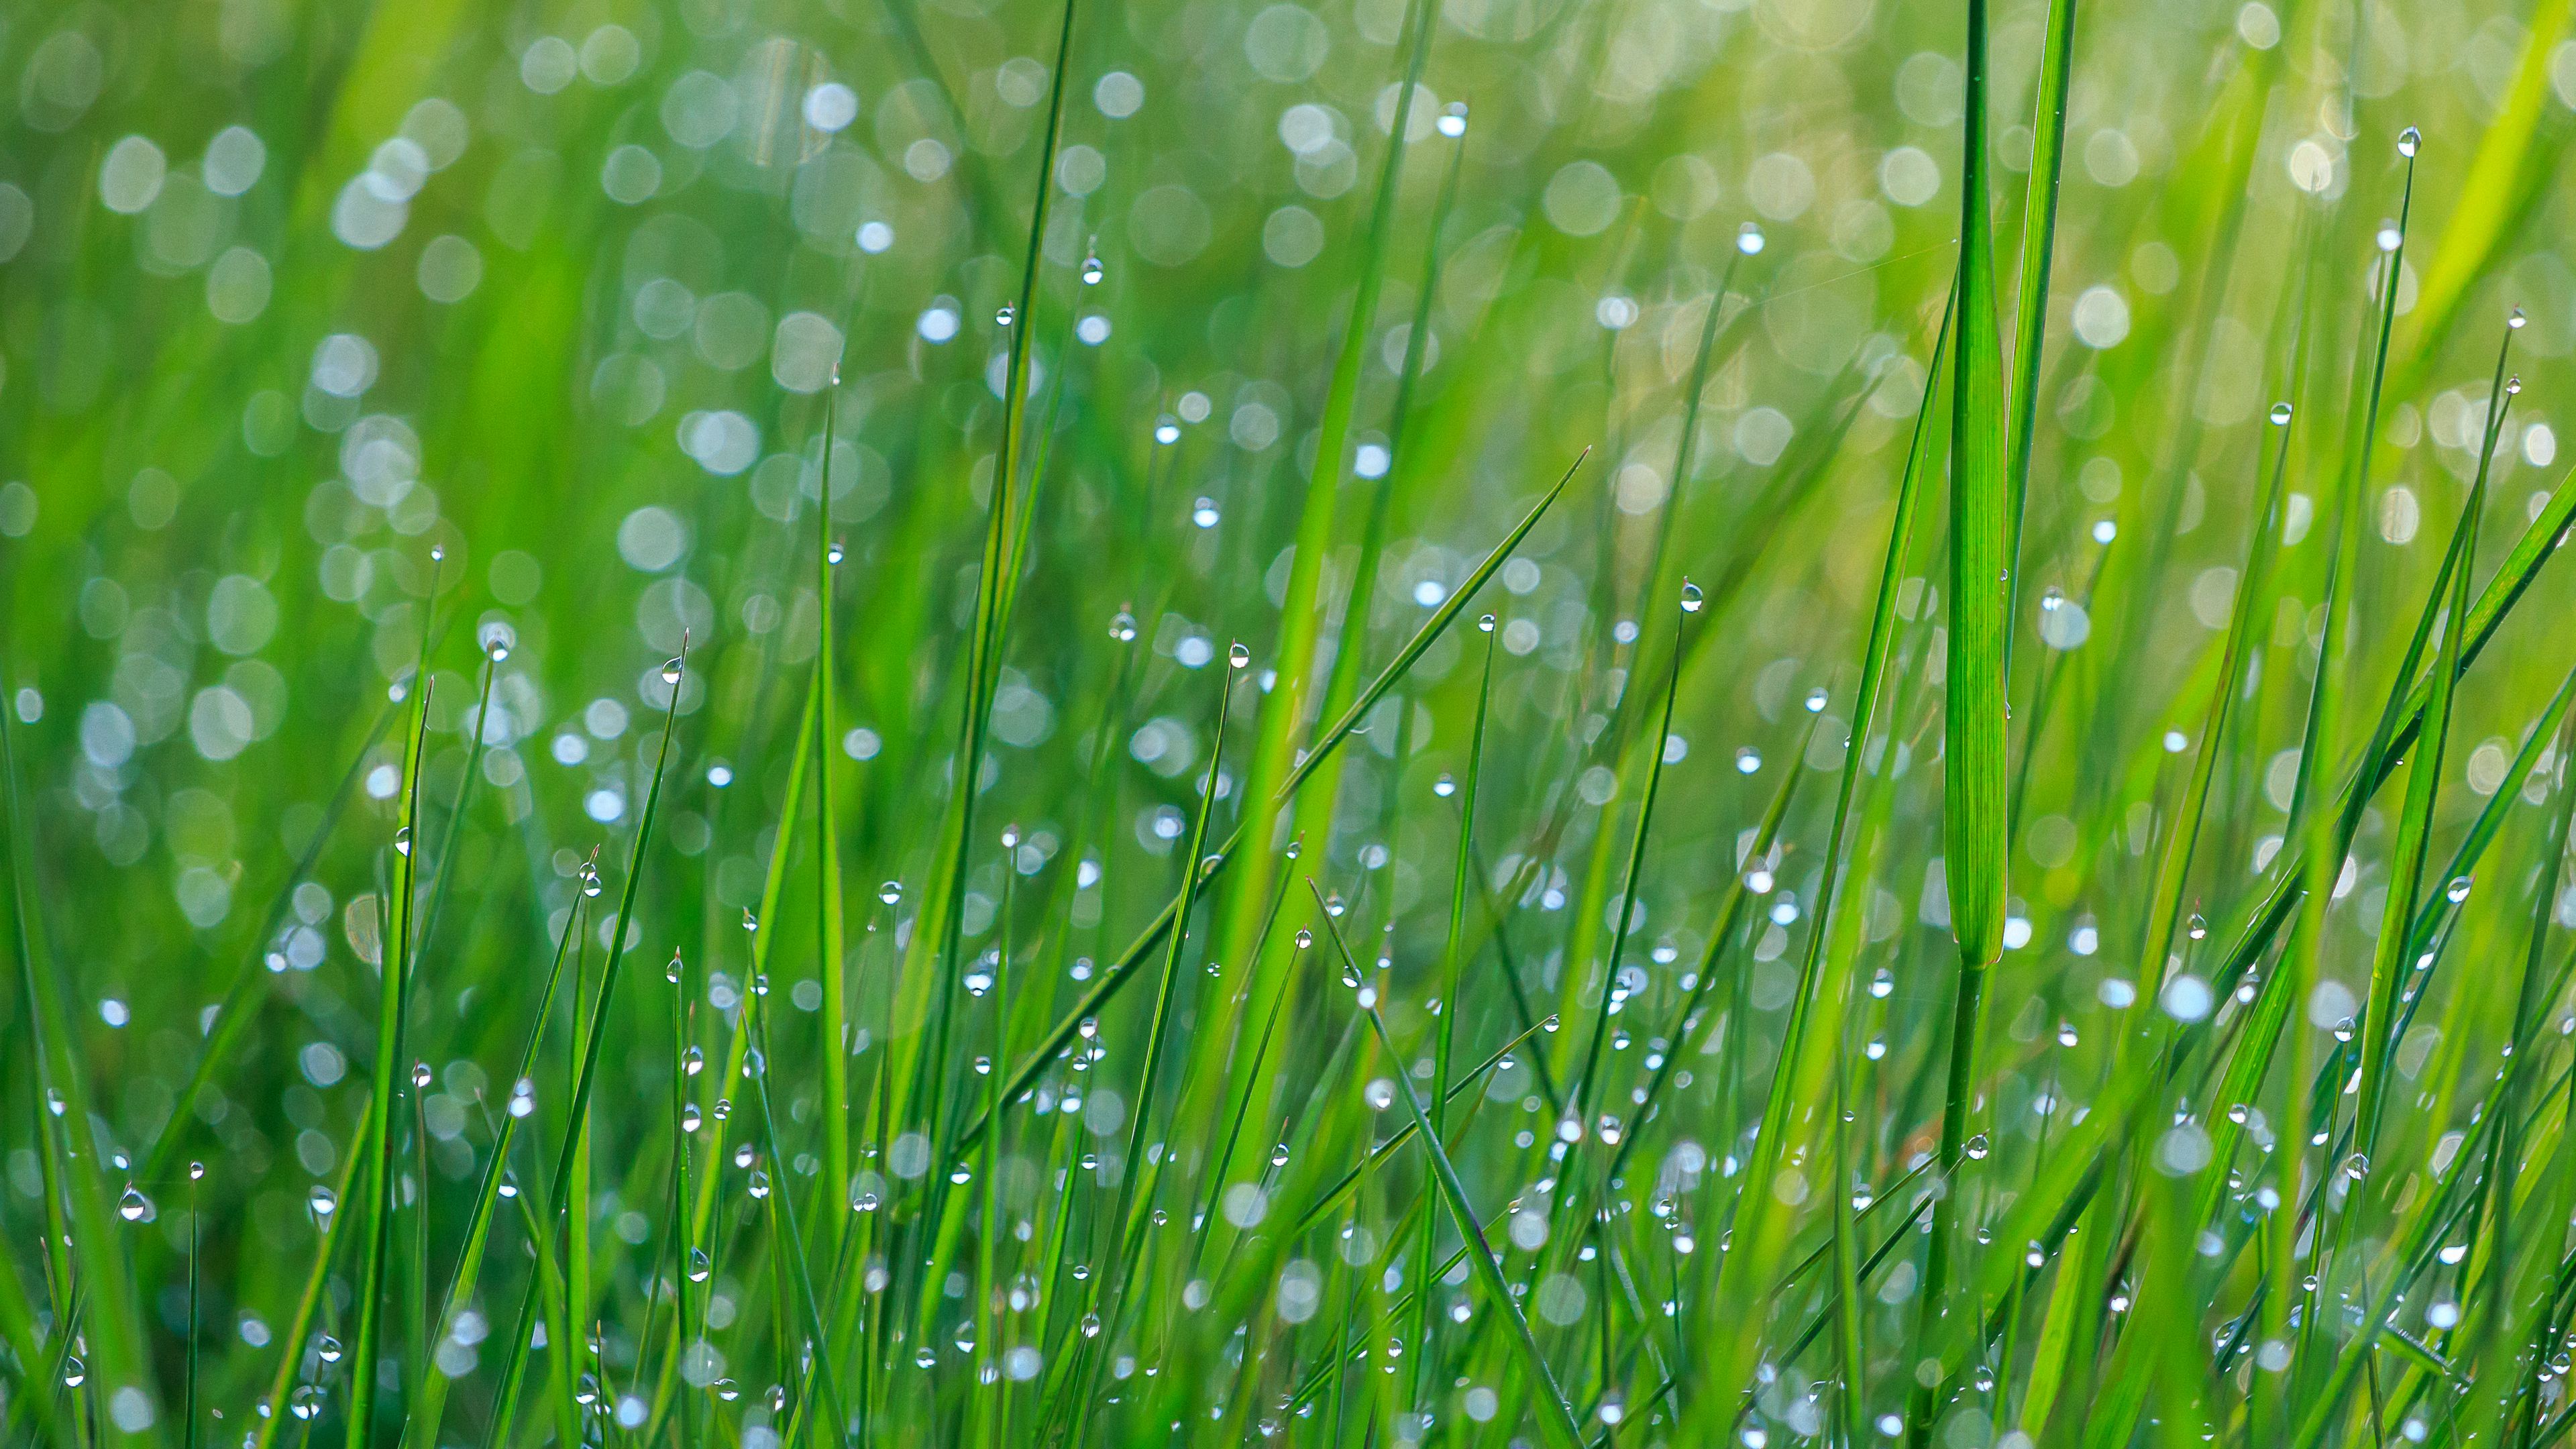 Download wallpaper 3840x2160 grass, dew, drops, wet, green 4k uhd 16:9 hd  background